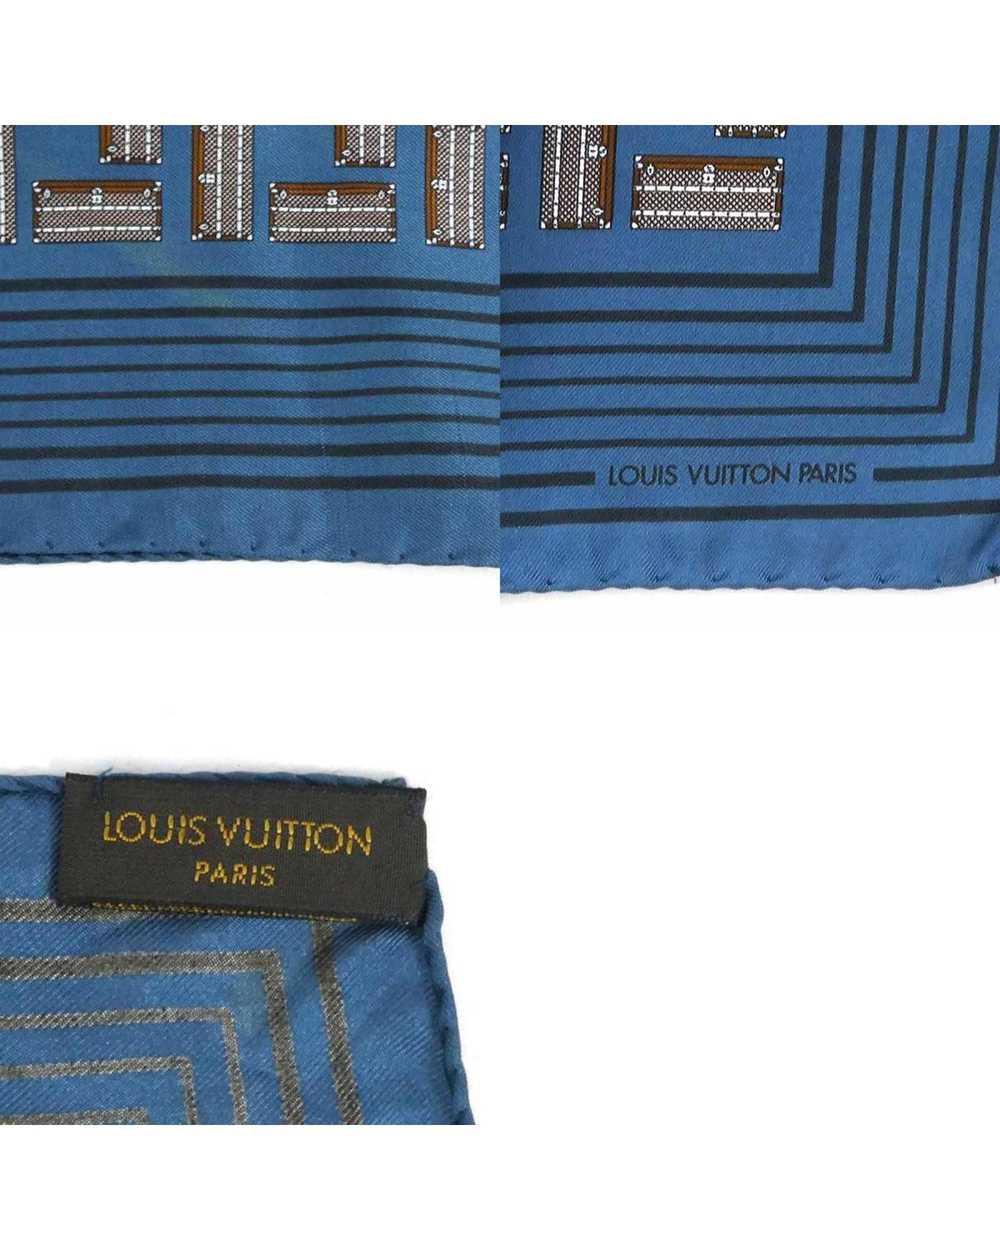 Louis Vuitton Iconic Monogram Silk Scarf - image 5